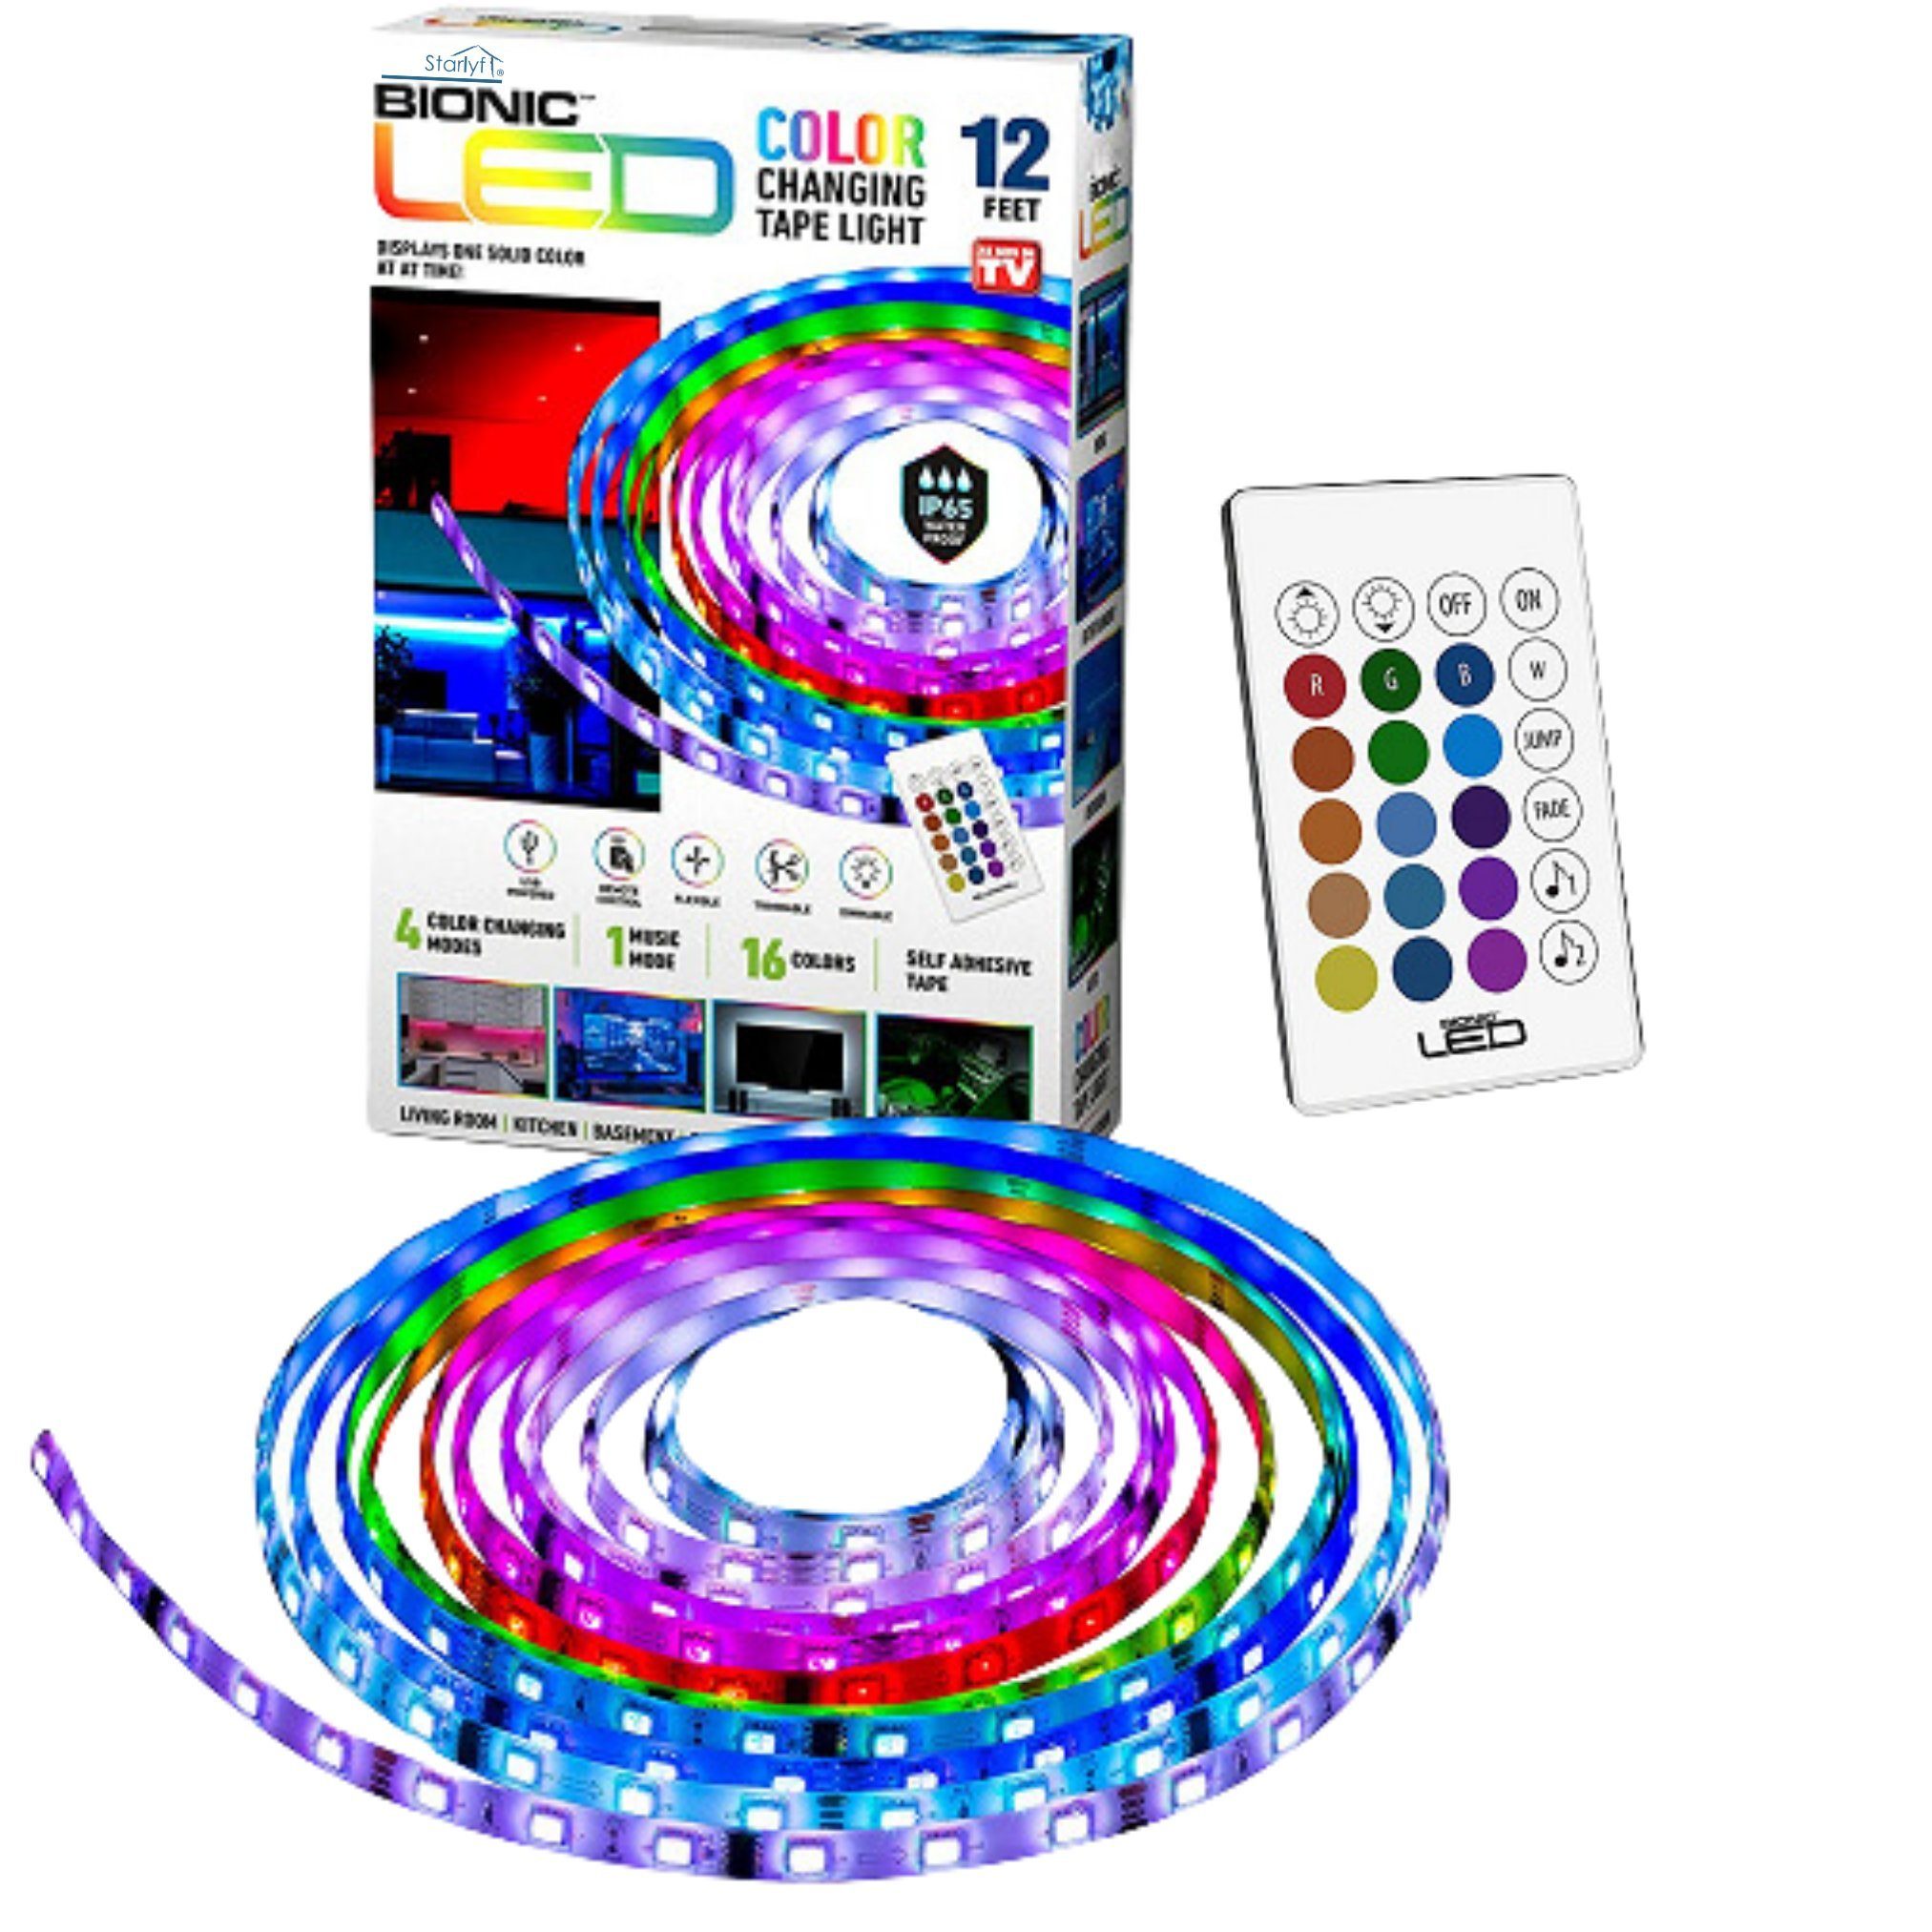 Starlyf LED Stripe Bionic LED Lichterkette, LED Lichtband, Farbwechsel  Leiste, 16 Farben, 4 Modi, Fernbedienung